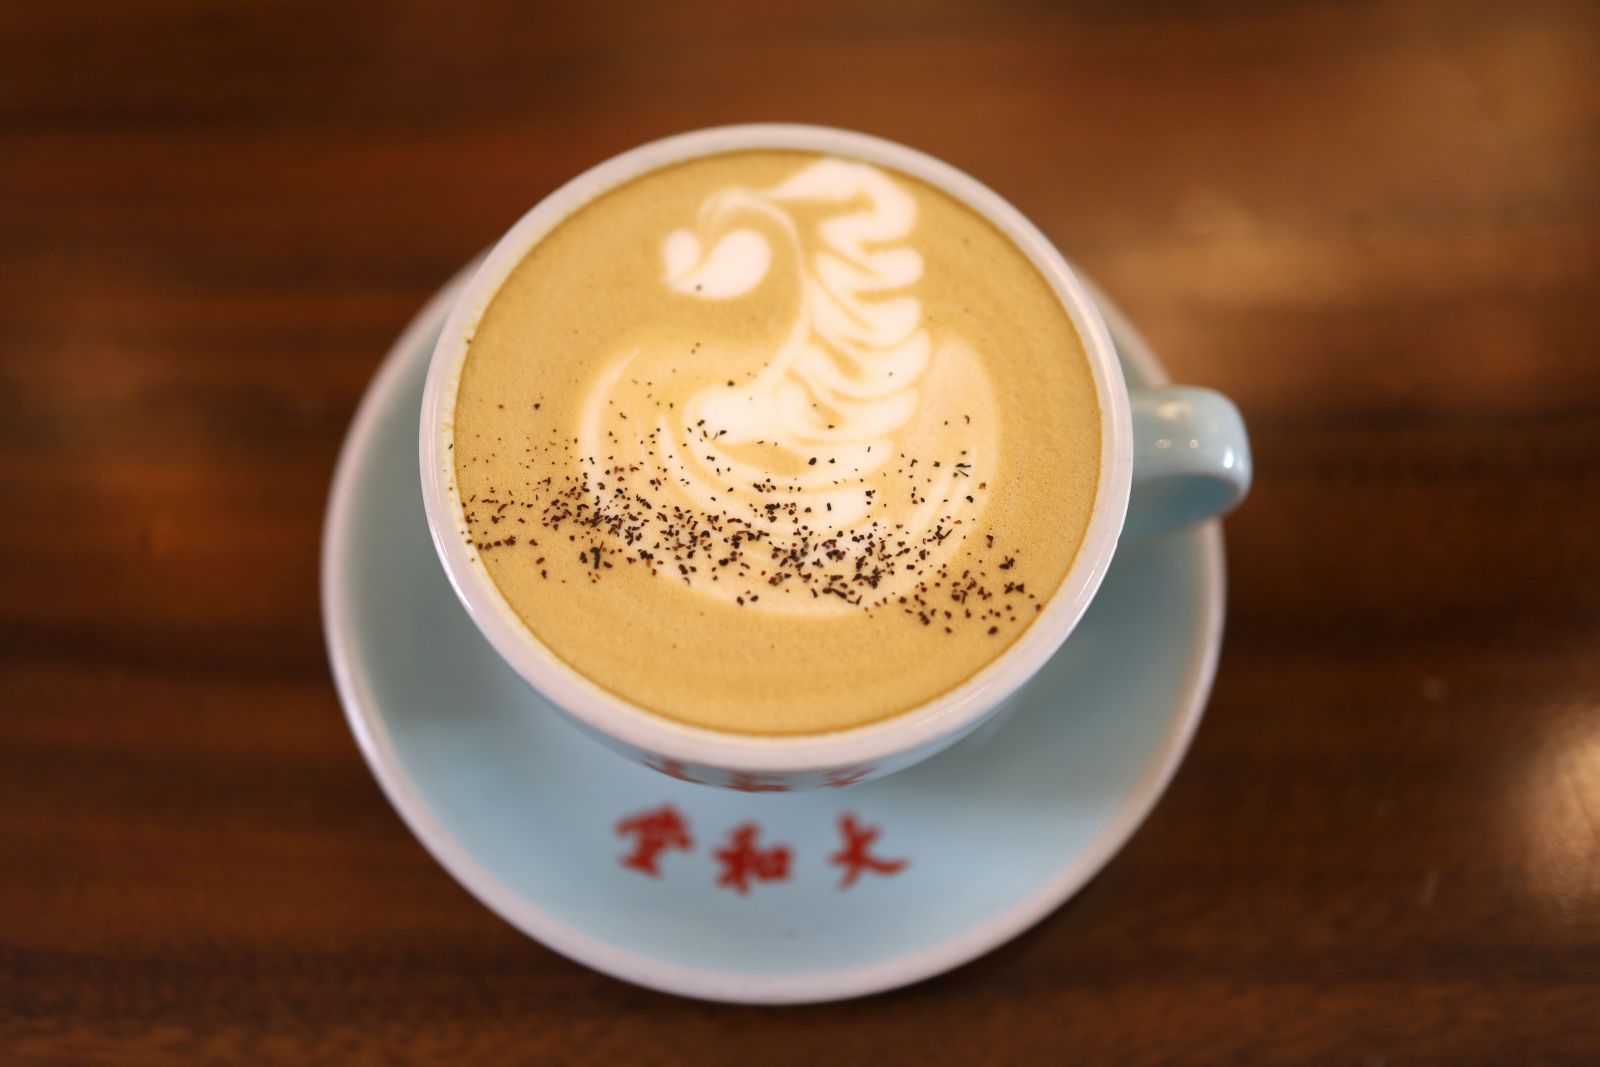 The coffee shop’s signature Tai Wong Tang latte